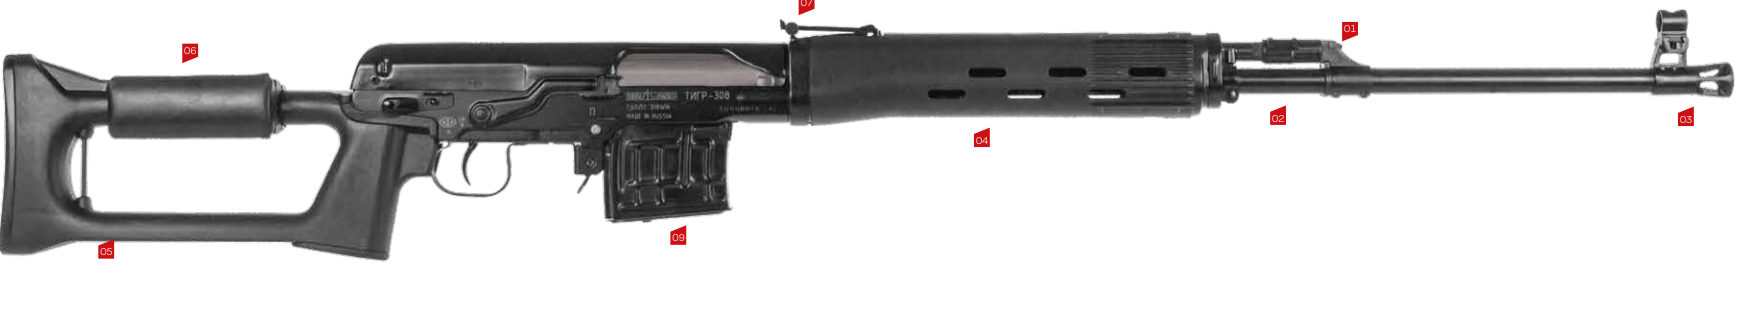 Tiger-308 carbine